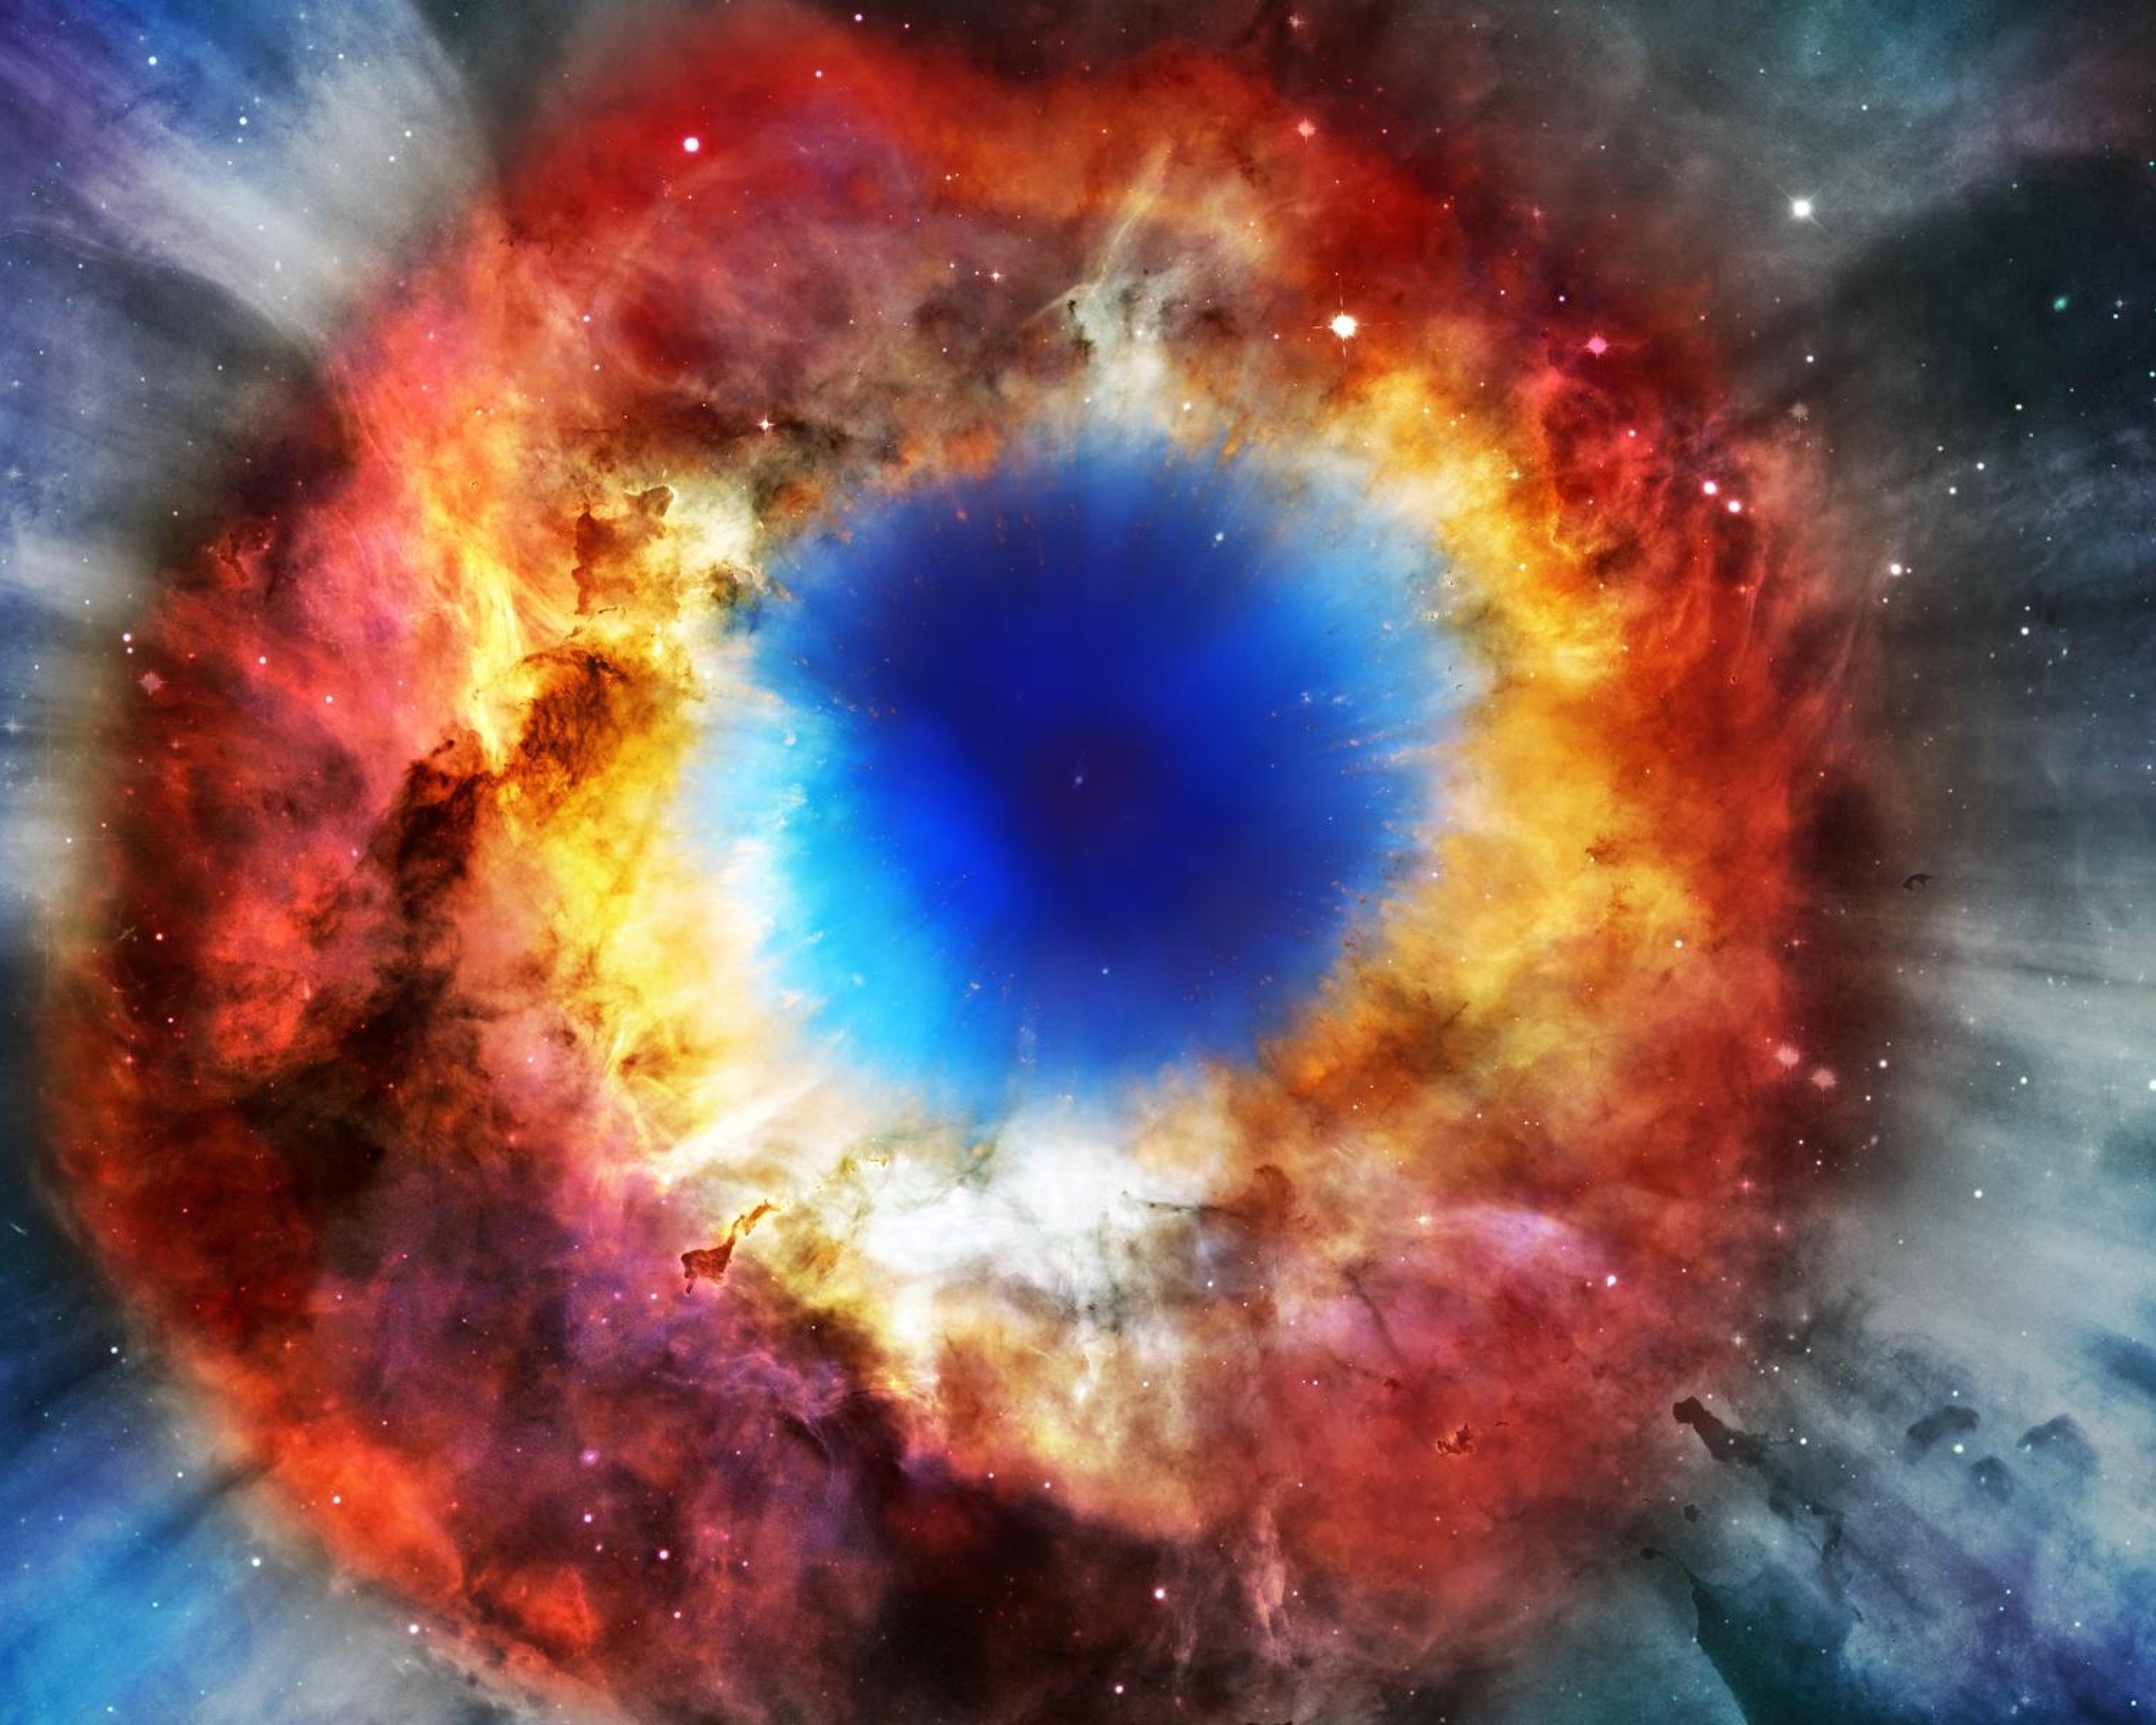 Image: Nebula, explosion, electricity, gas, flash, radiation, star, white dwarf